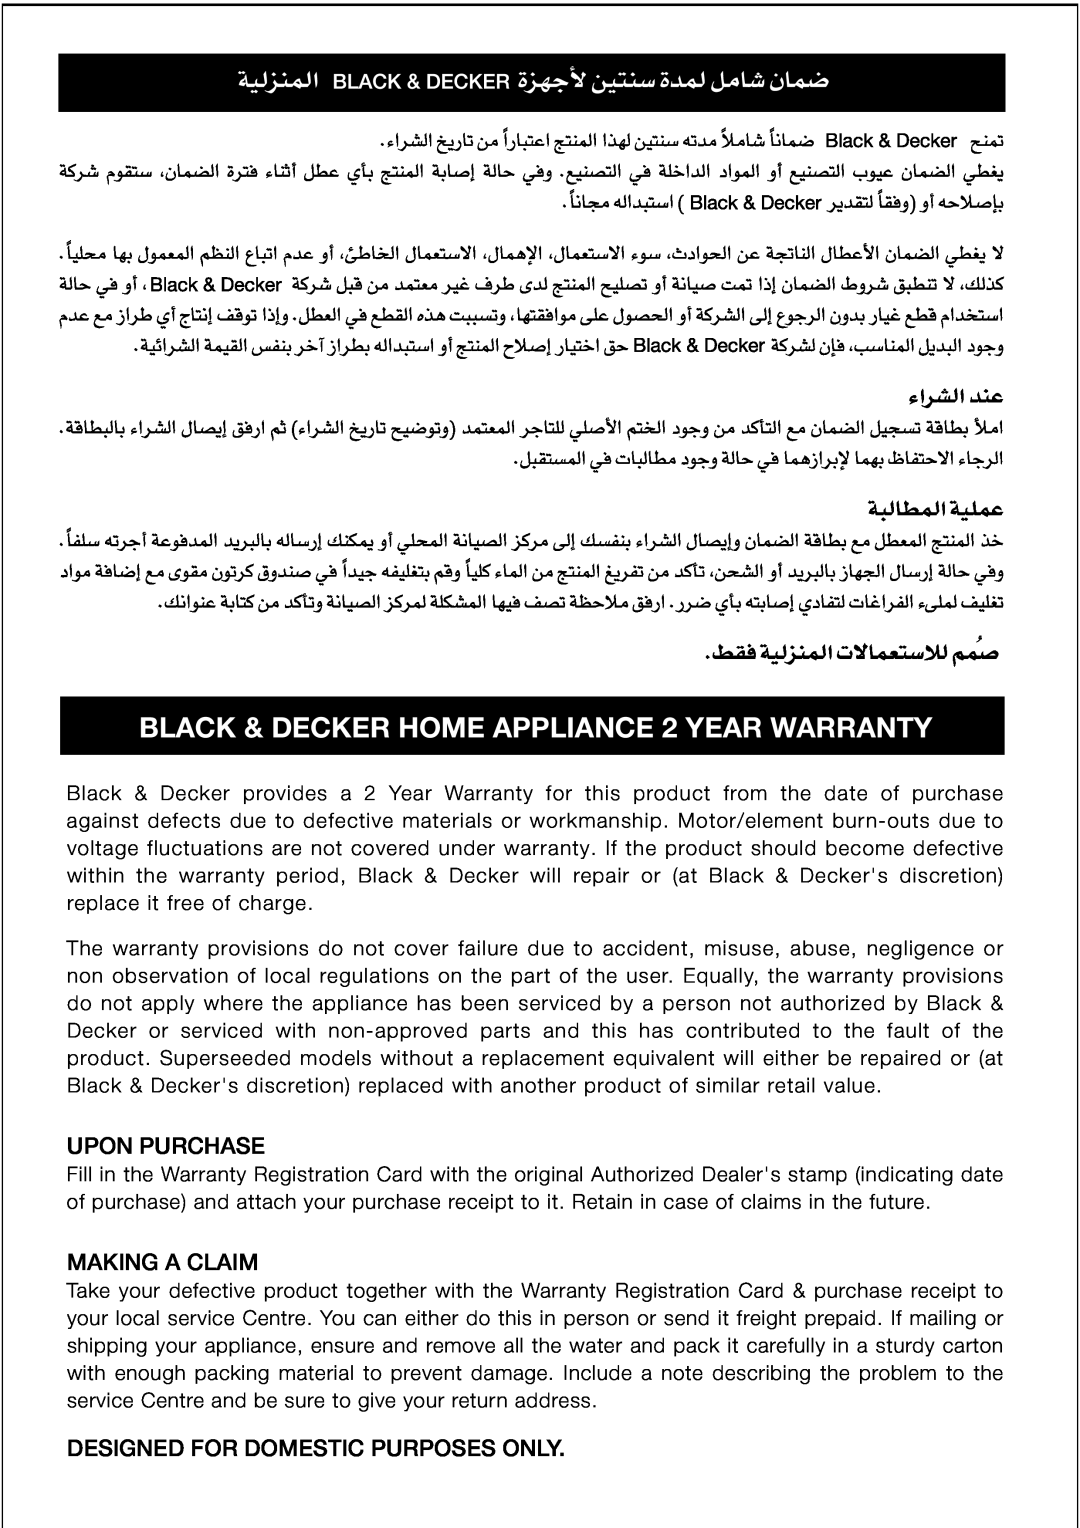 Black & Decker SB35, SB34, SB33 manual BLACK & DECKER HOME APPLIANCE 2 YEAR WARRANTY, Upon Purchase, Making A Claim 